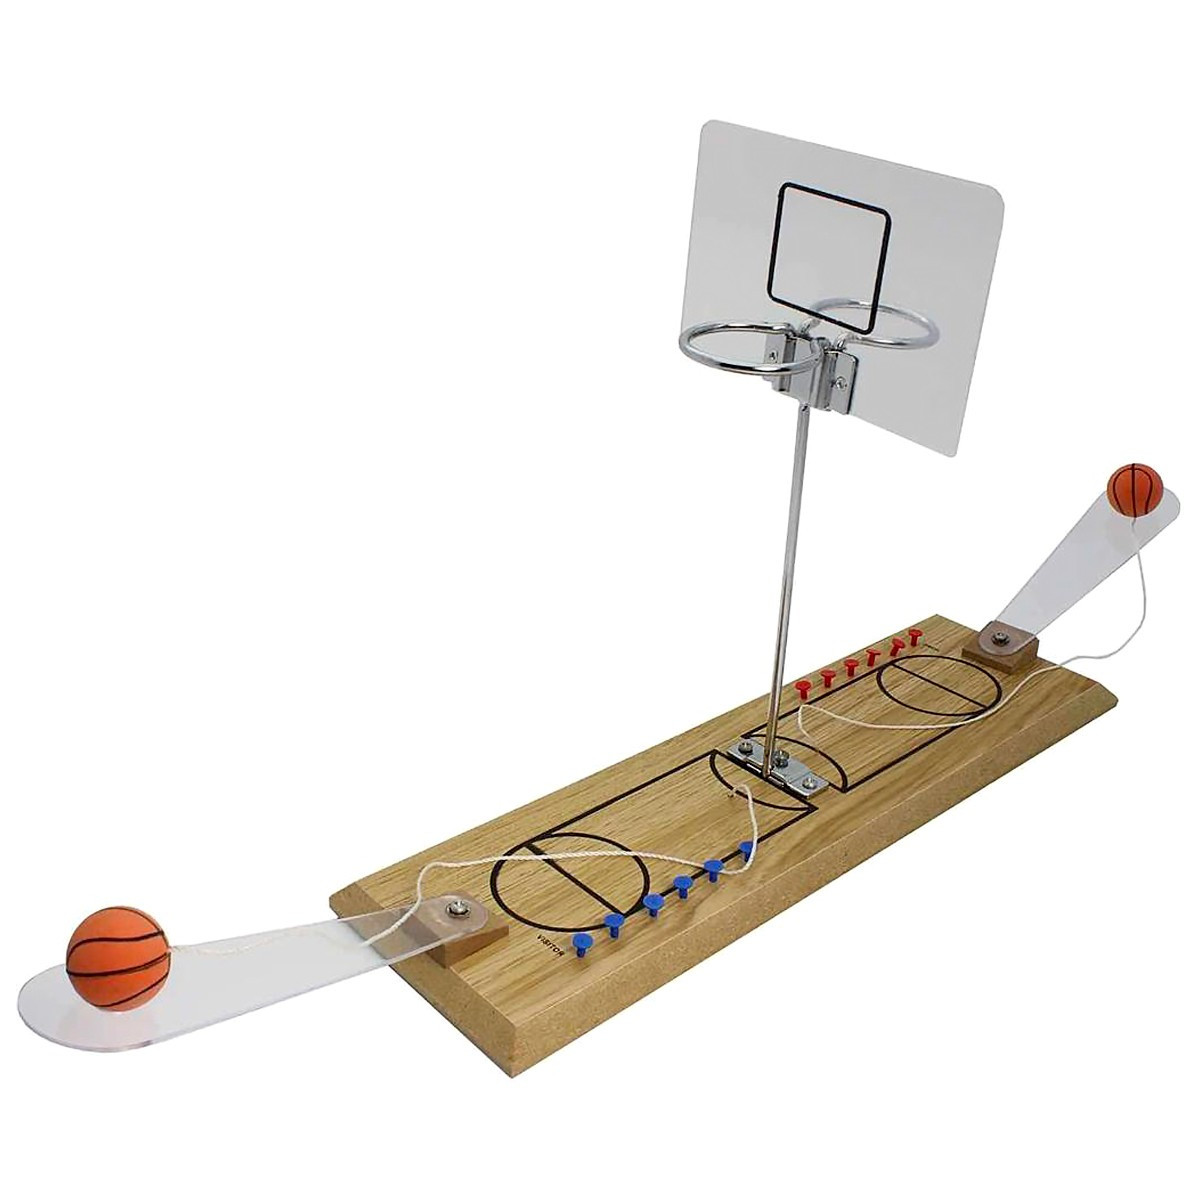 https://mycrazystuff.com/16479-width_2000/jeu-de-basket-de-table-double.jpg